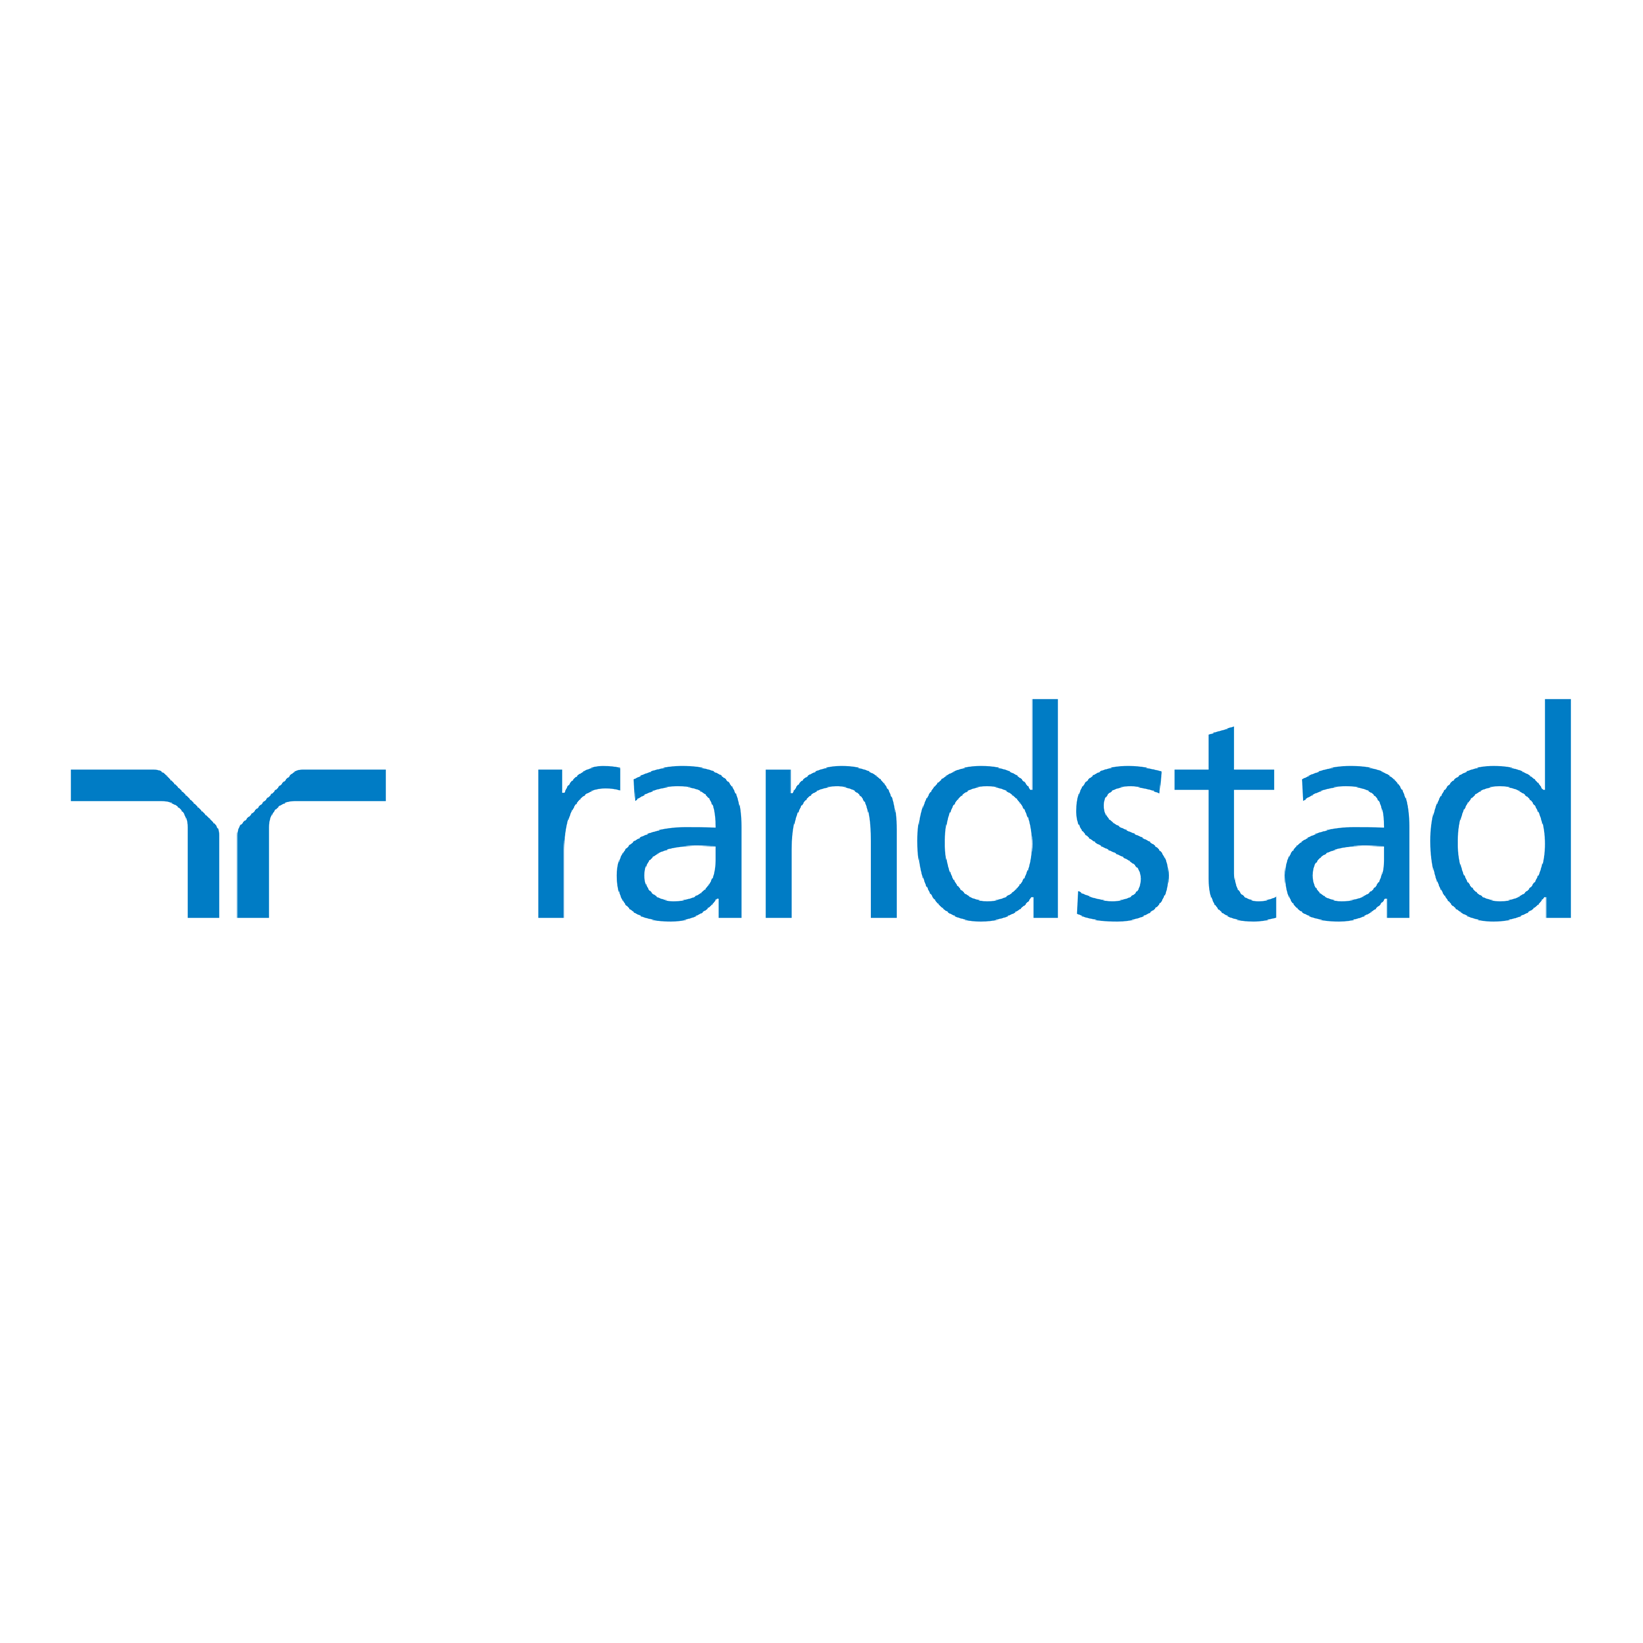 Randstad_image